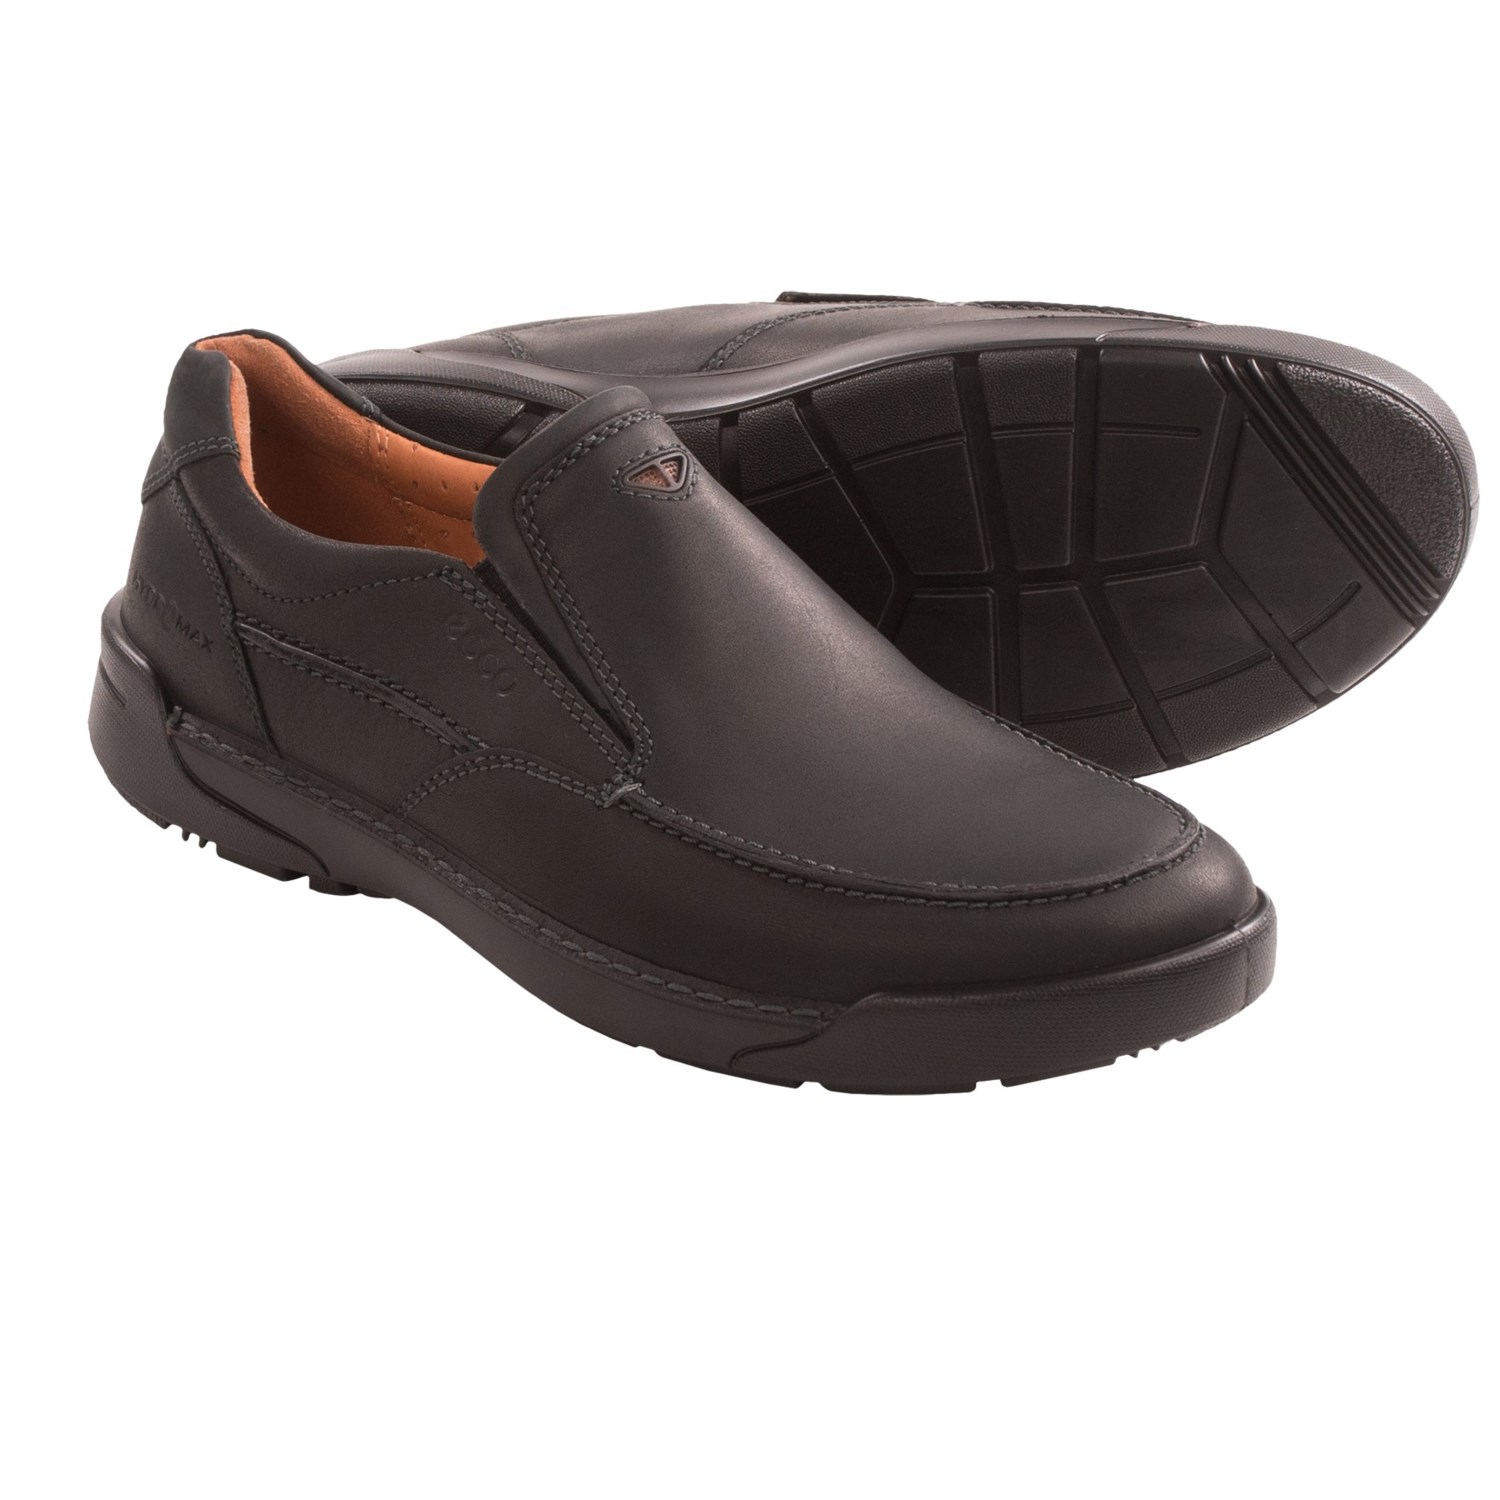 ECCO Dason Shoes - Slip-Ons (For Men) - Save 20%